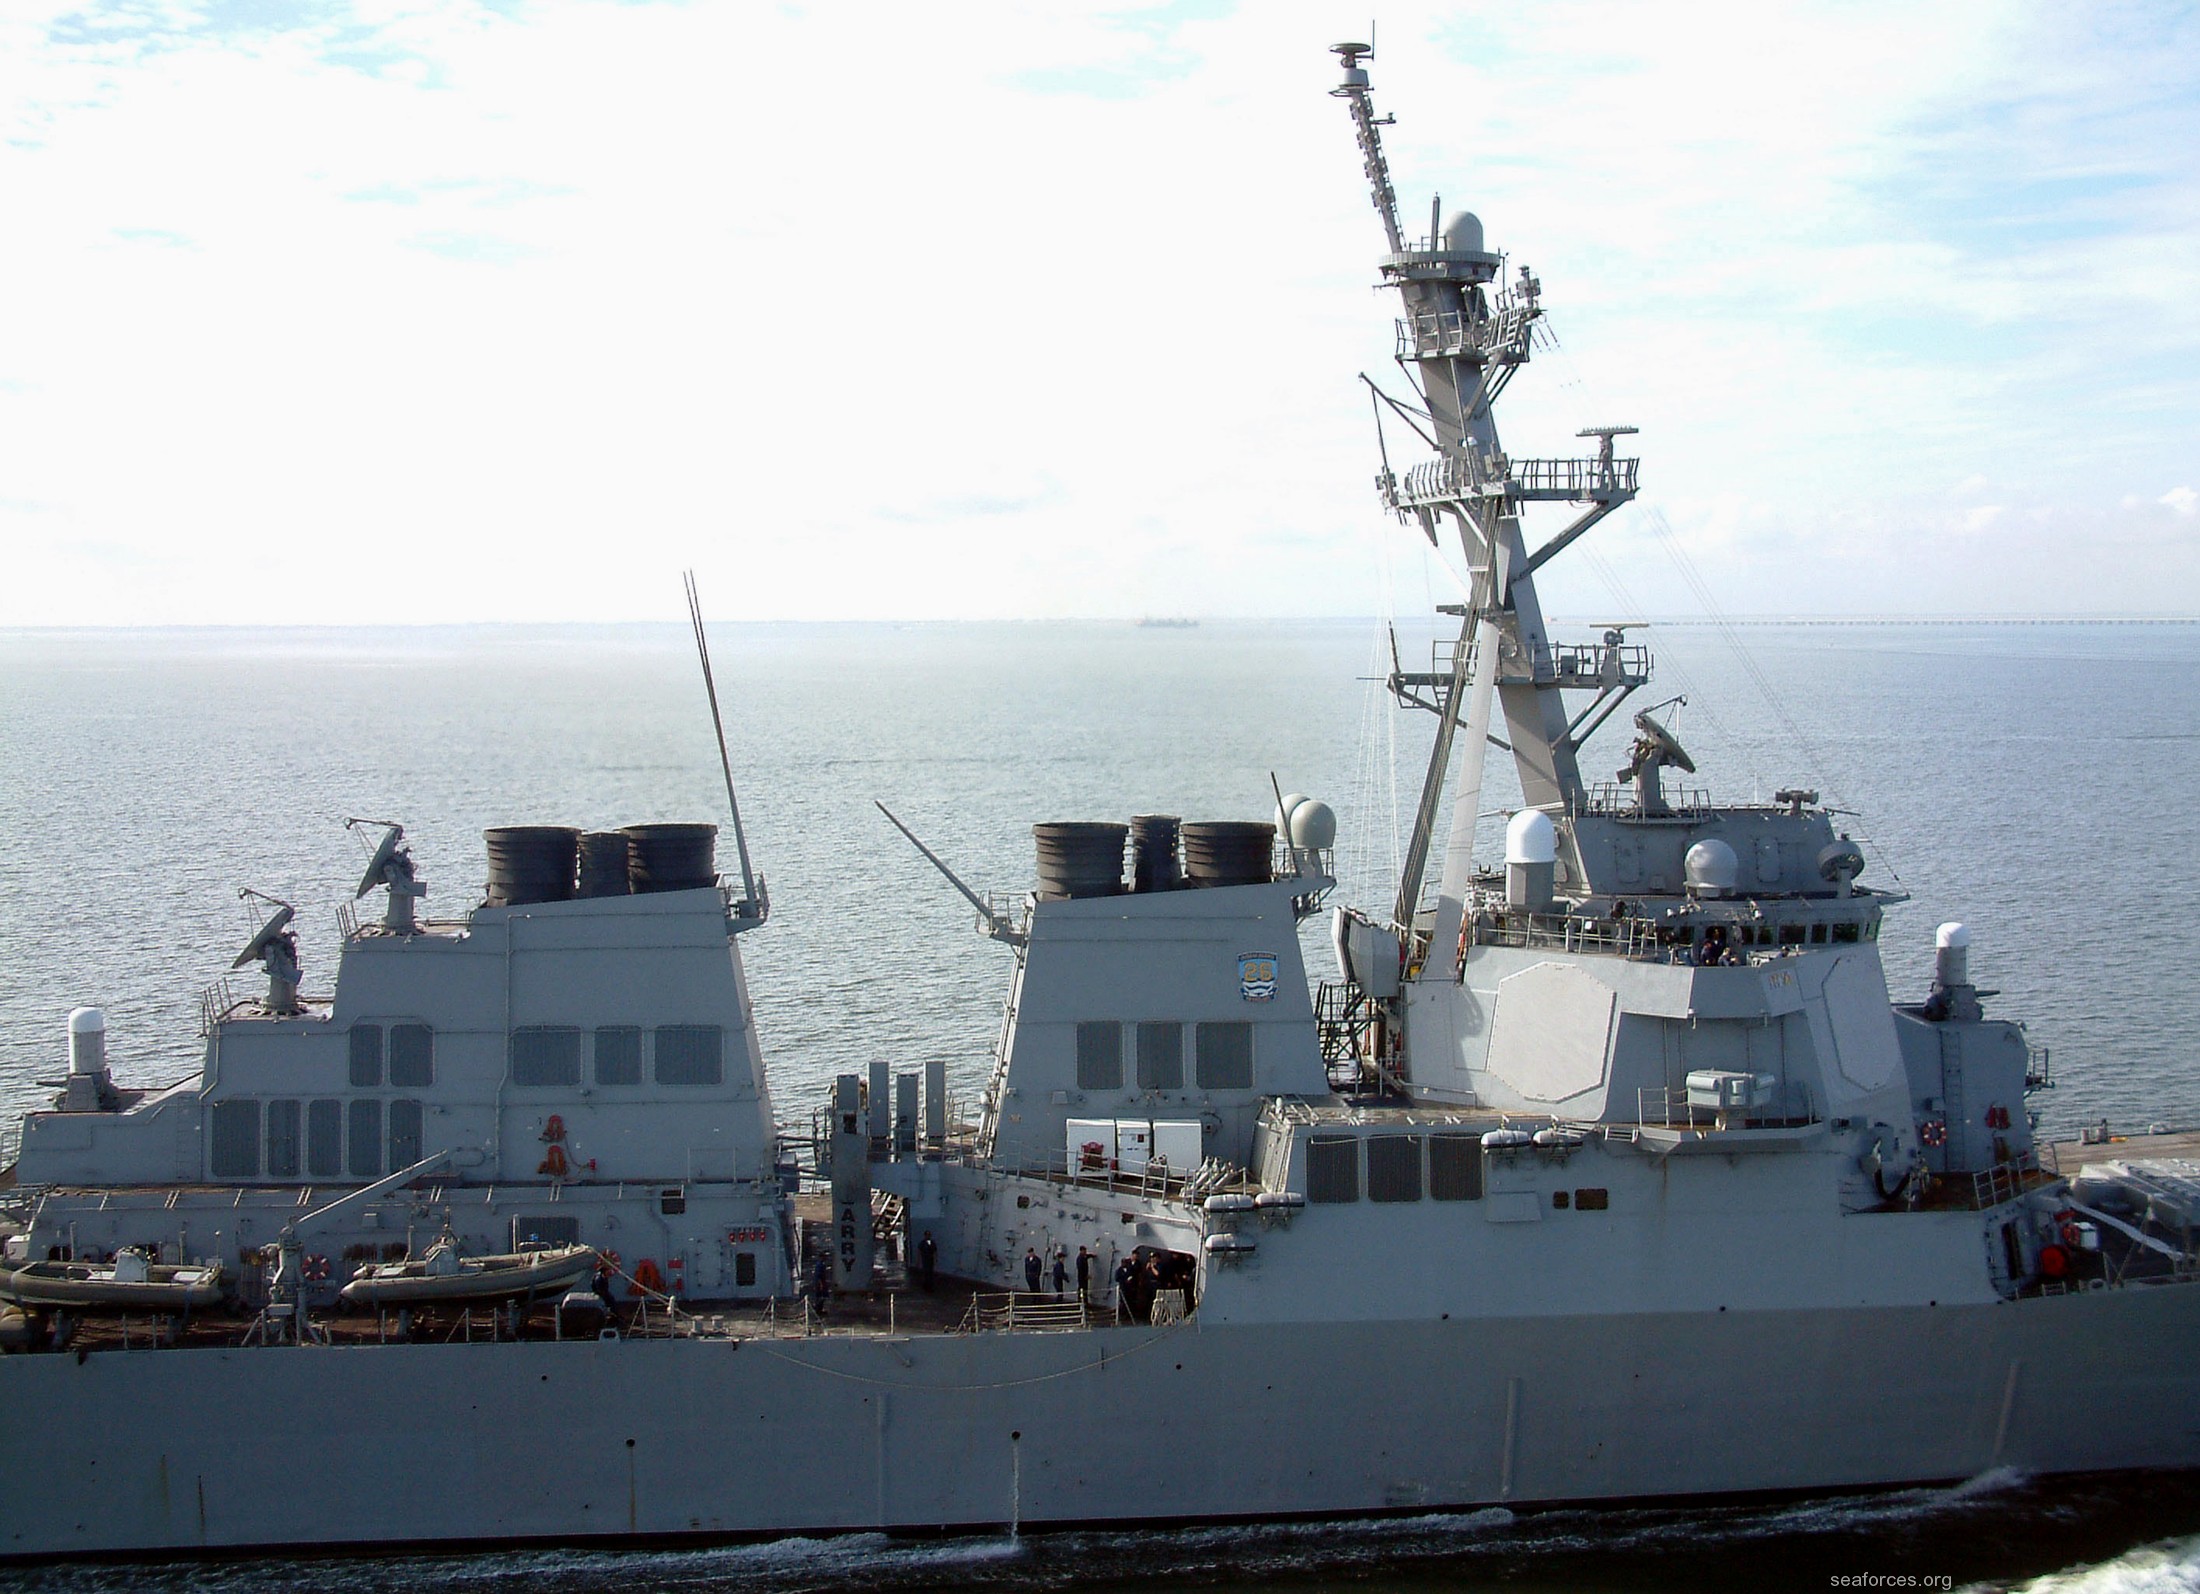 ddg-52 uss barry guided missile destroyer us navy 89